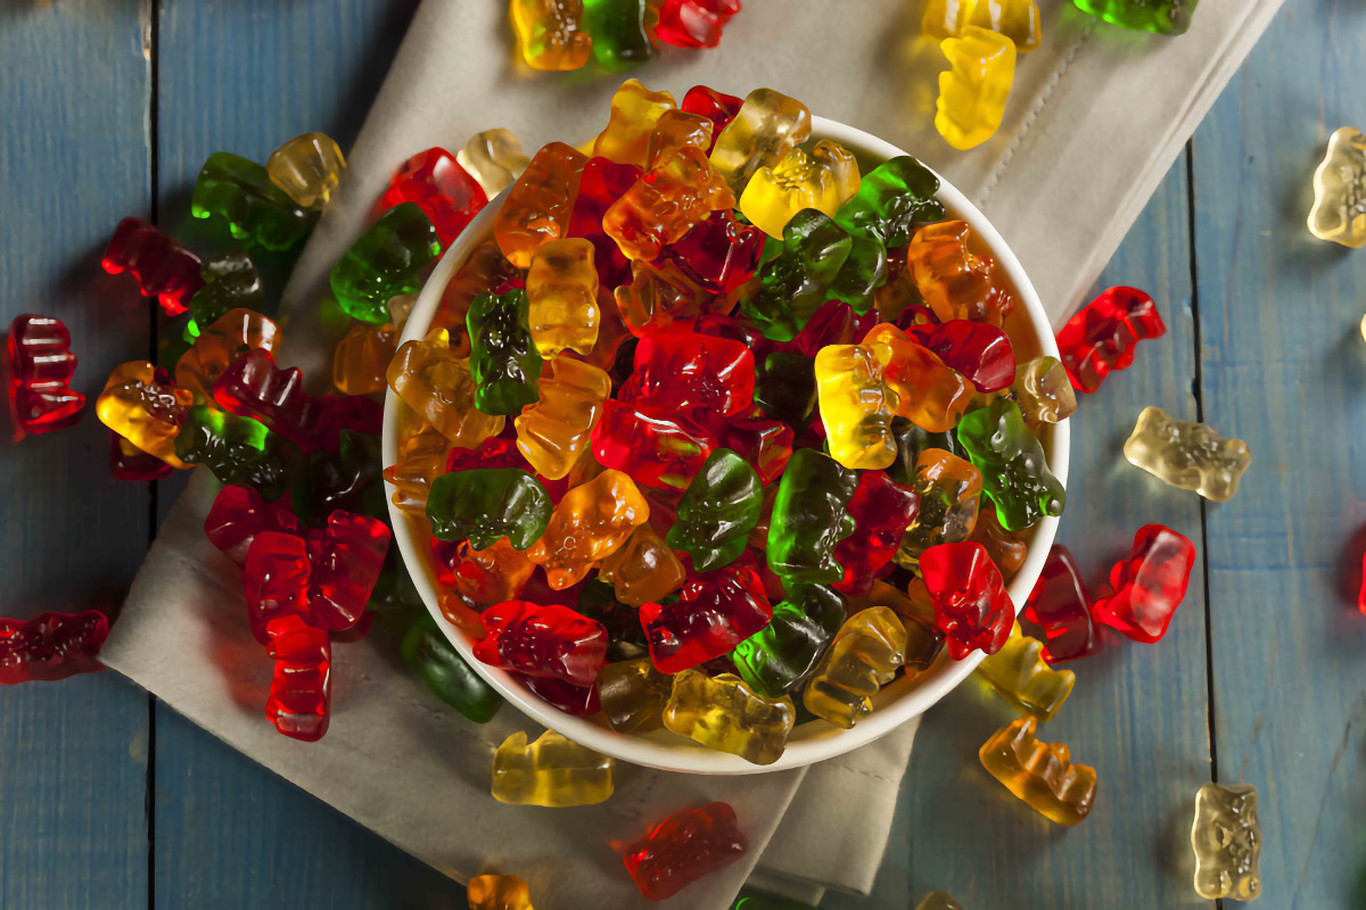 Do-It-Yourself Gummy Bears Recipe